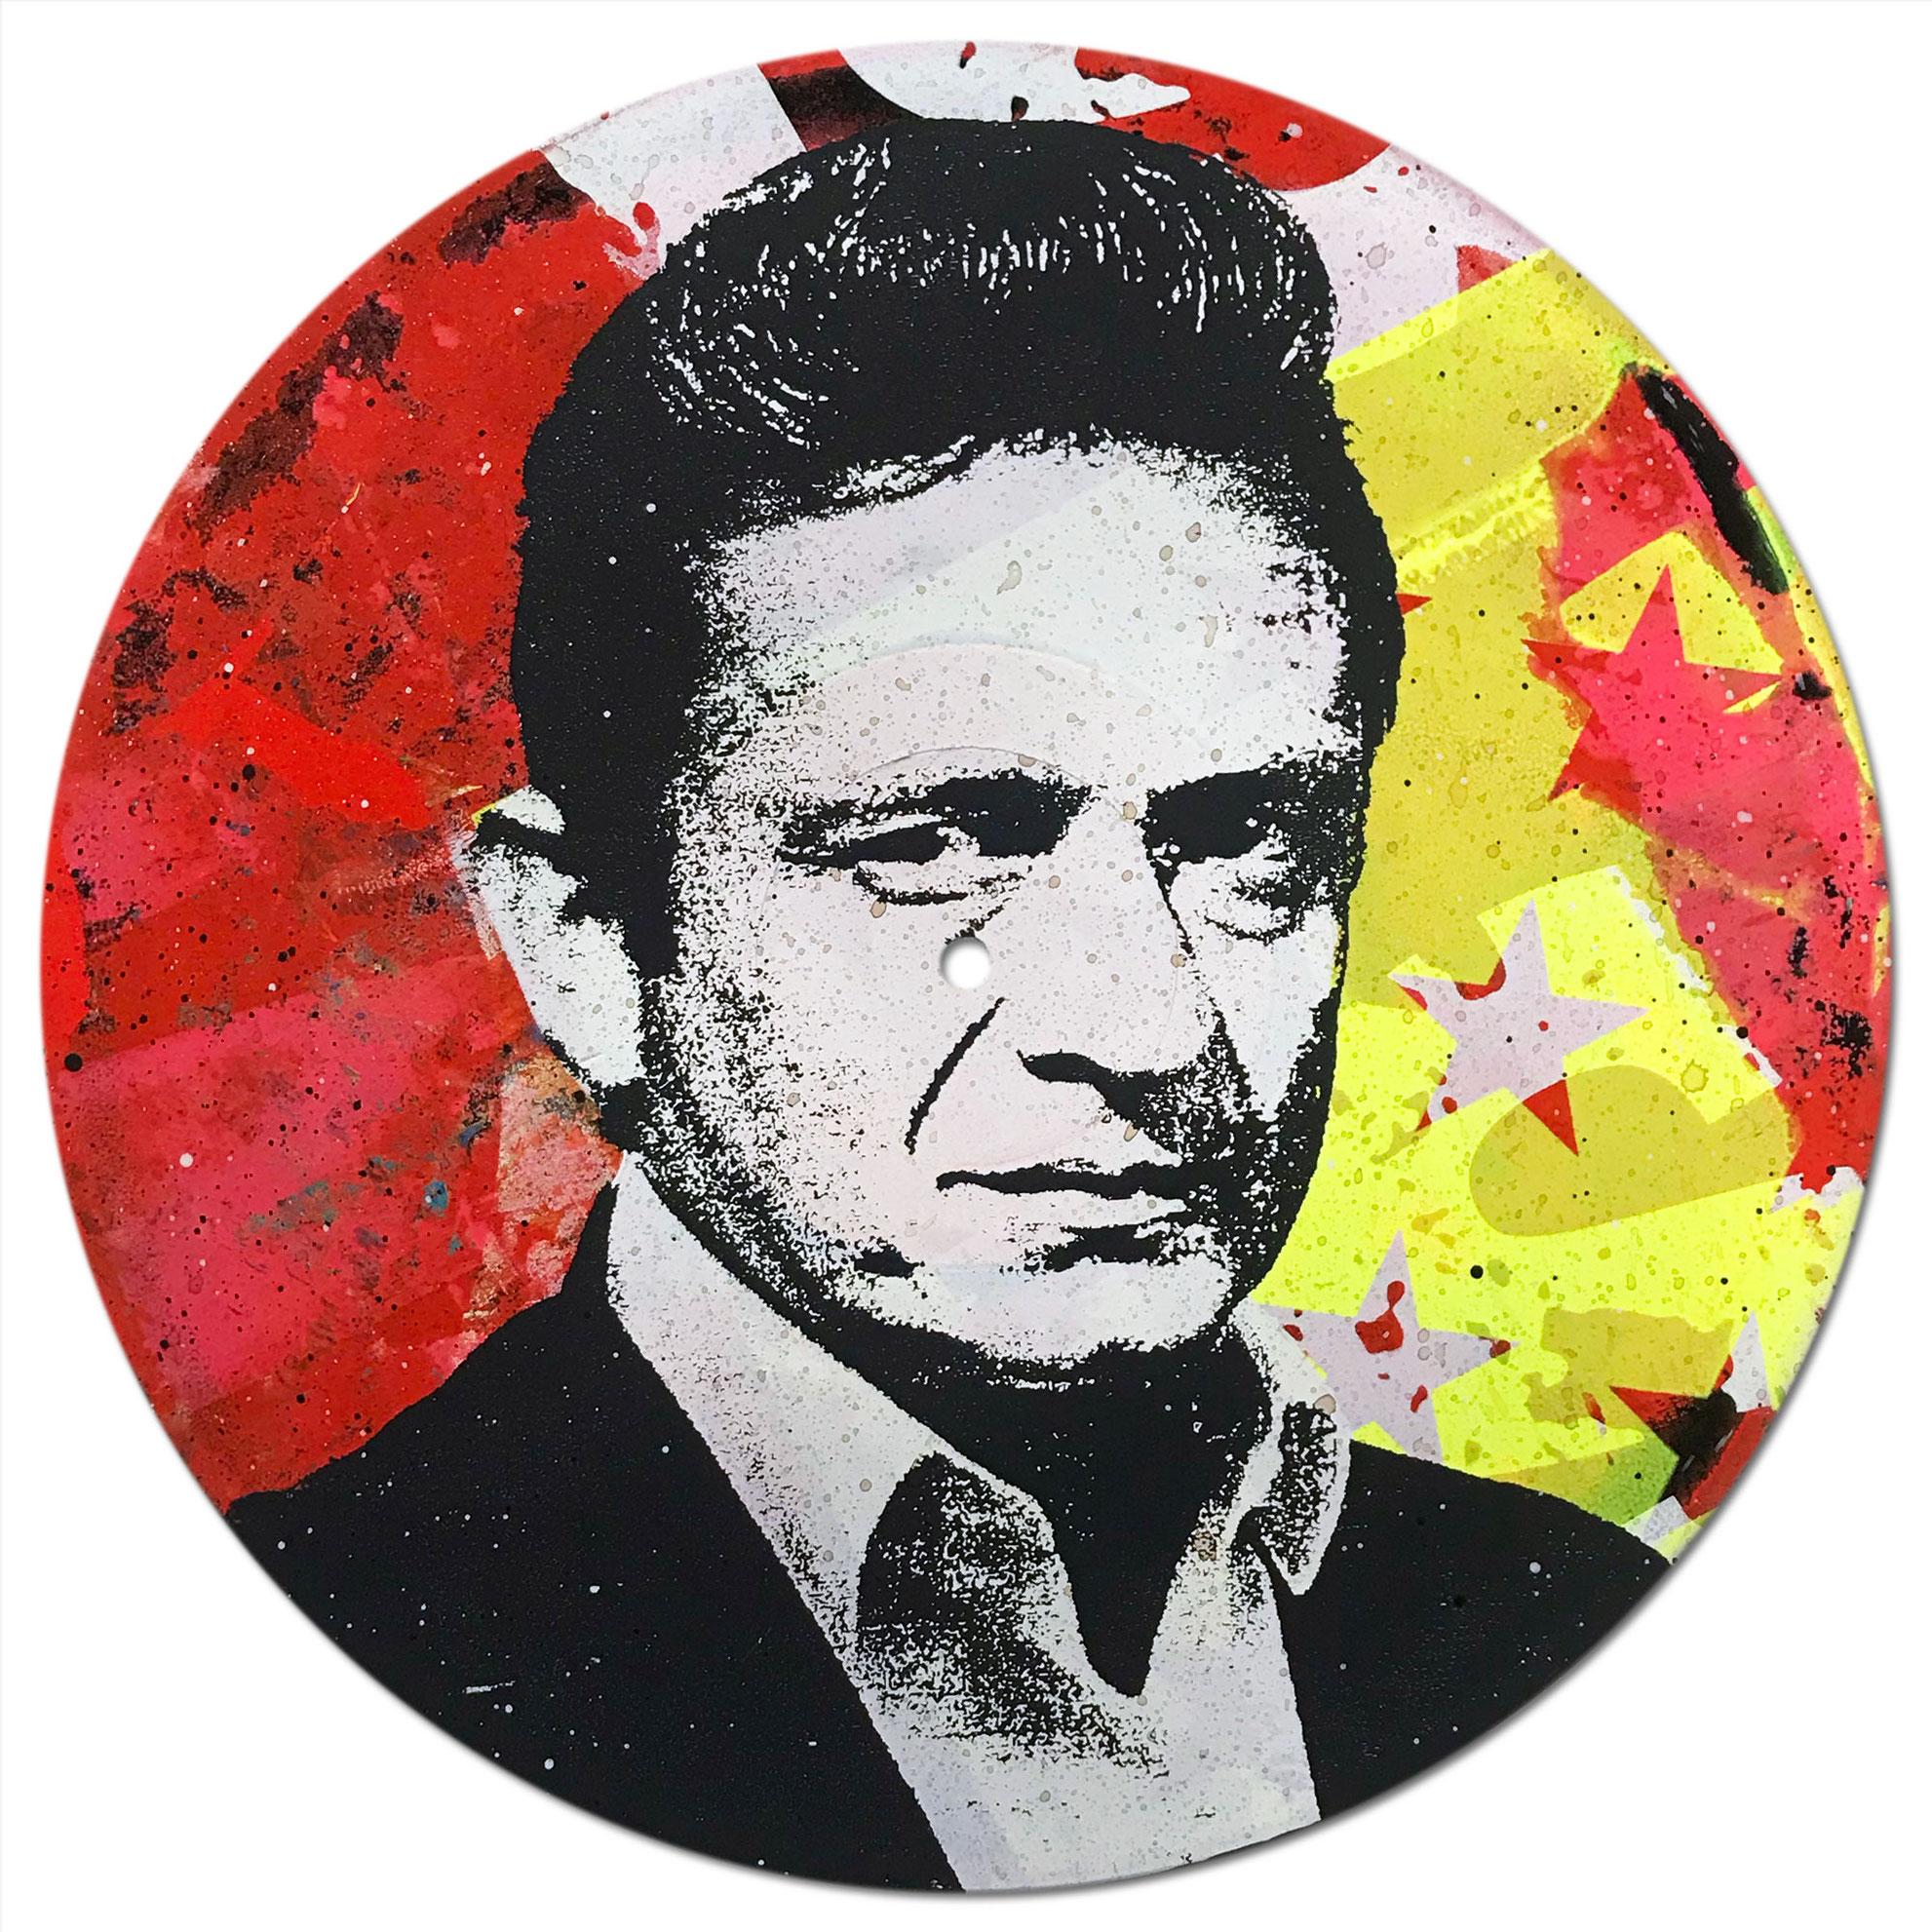 Johnny Cash Vinyl 1-10, Greg Gossel Pop Art LP Record (Singles & Sets Available) For Sale 5